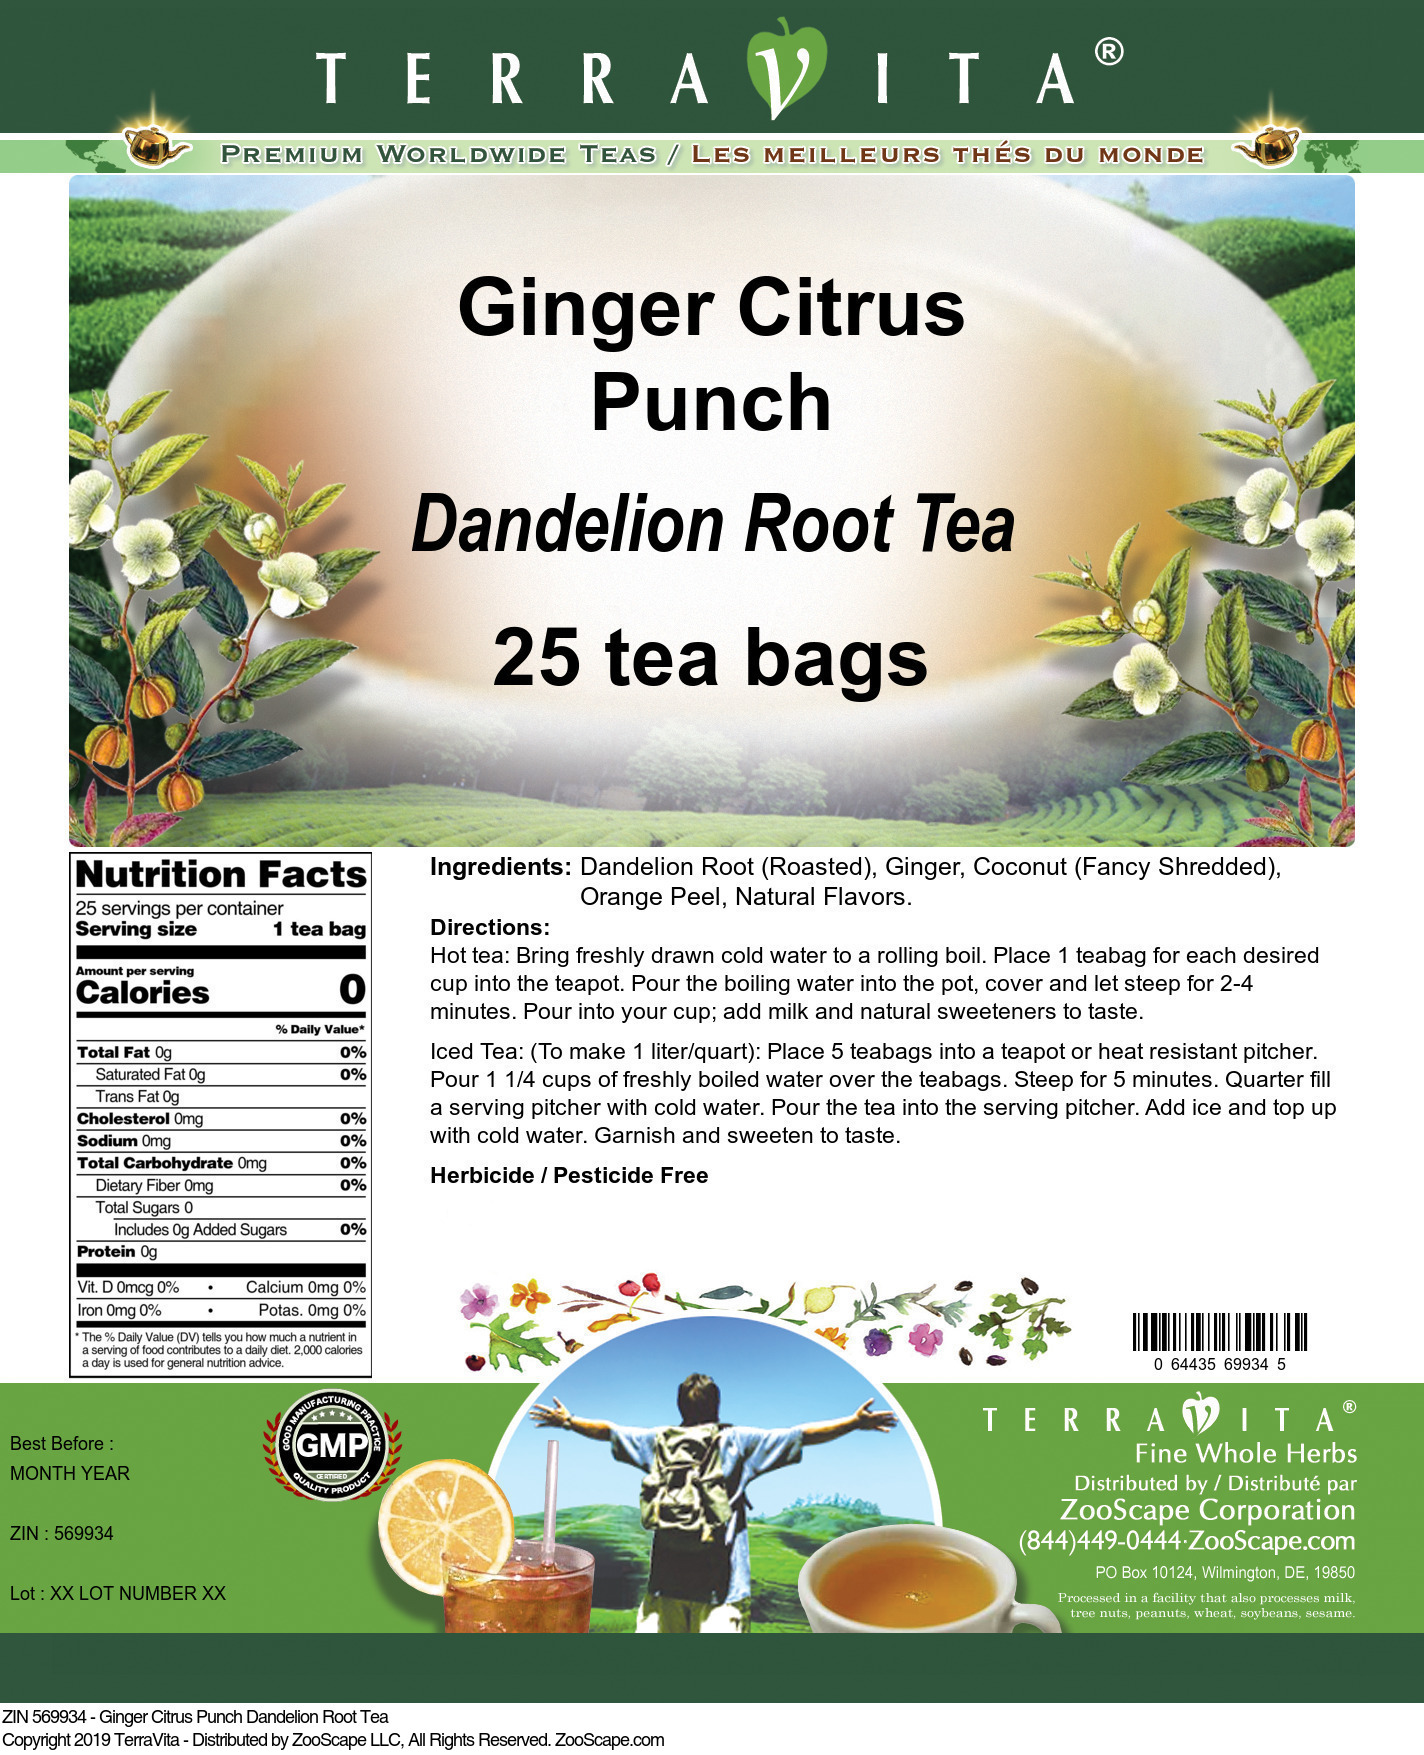 Ginger Citrus Punch Dandelion Root Tea - Label